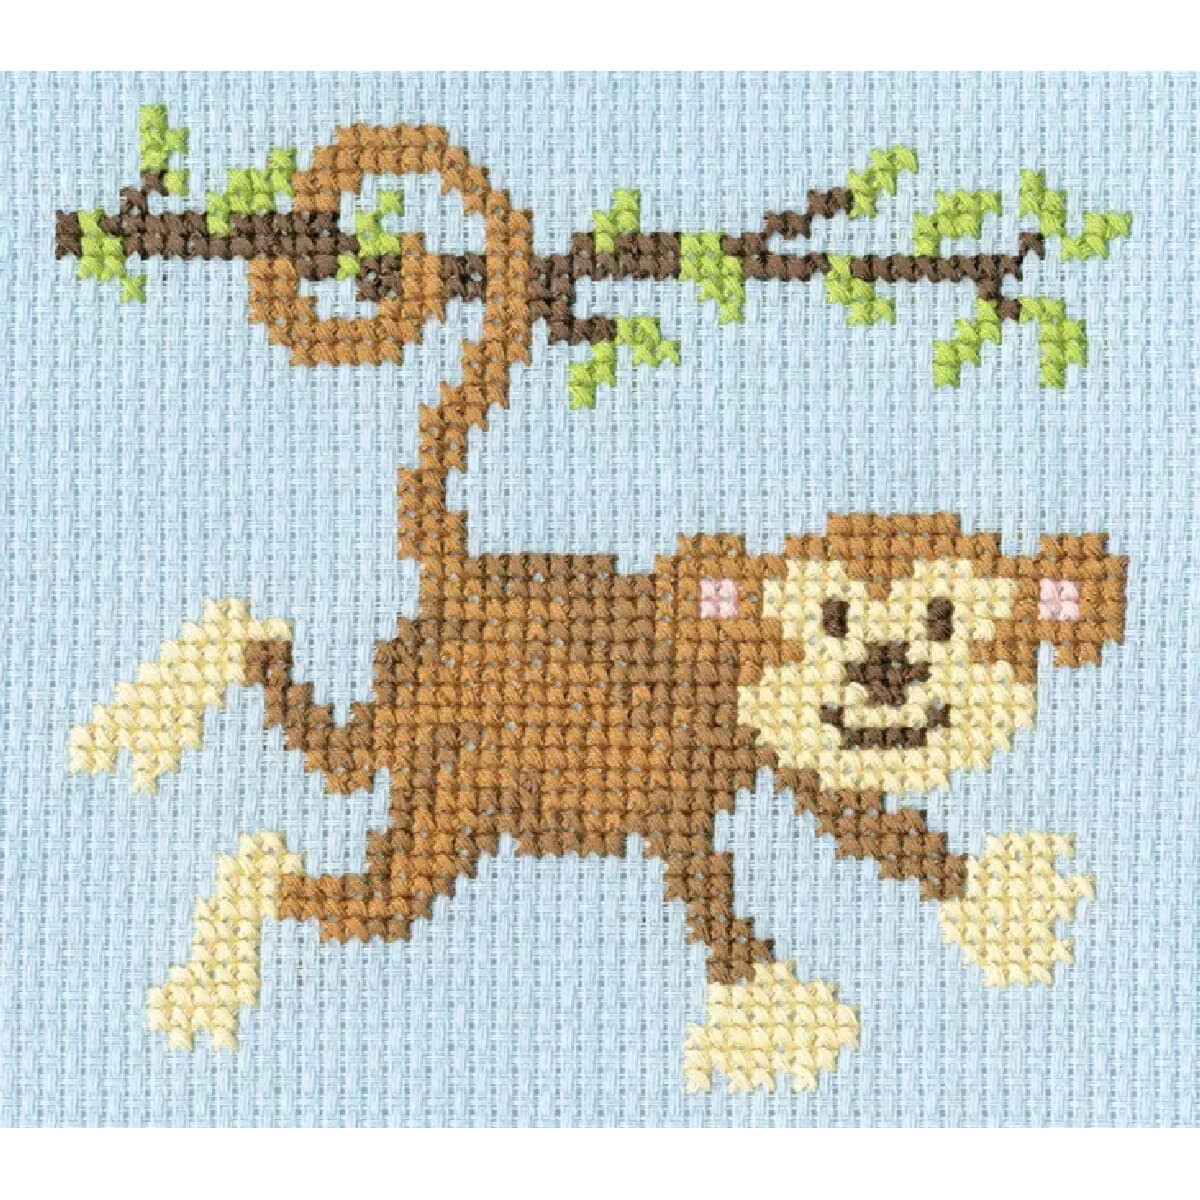 Bothy Threads counted cross stitch kit "Monkey...